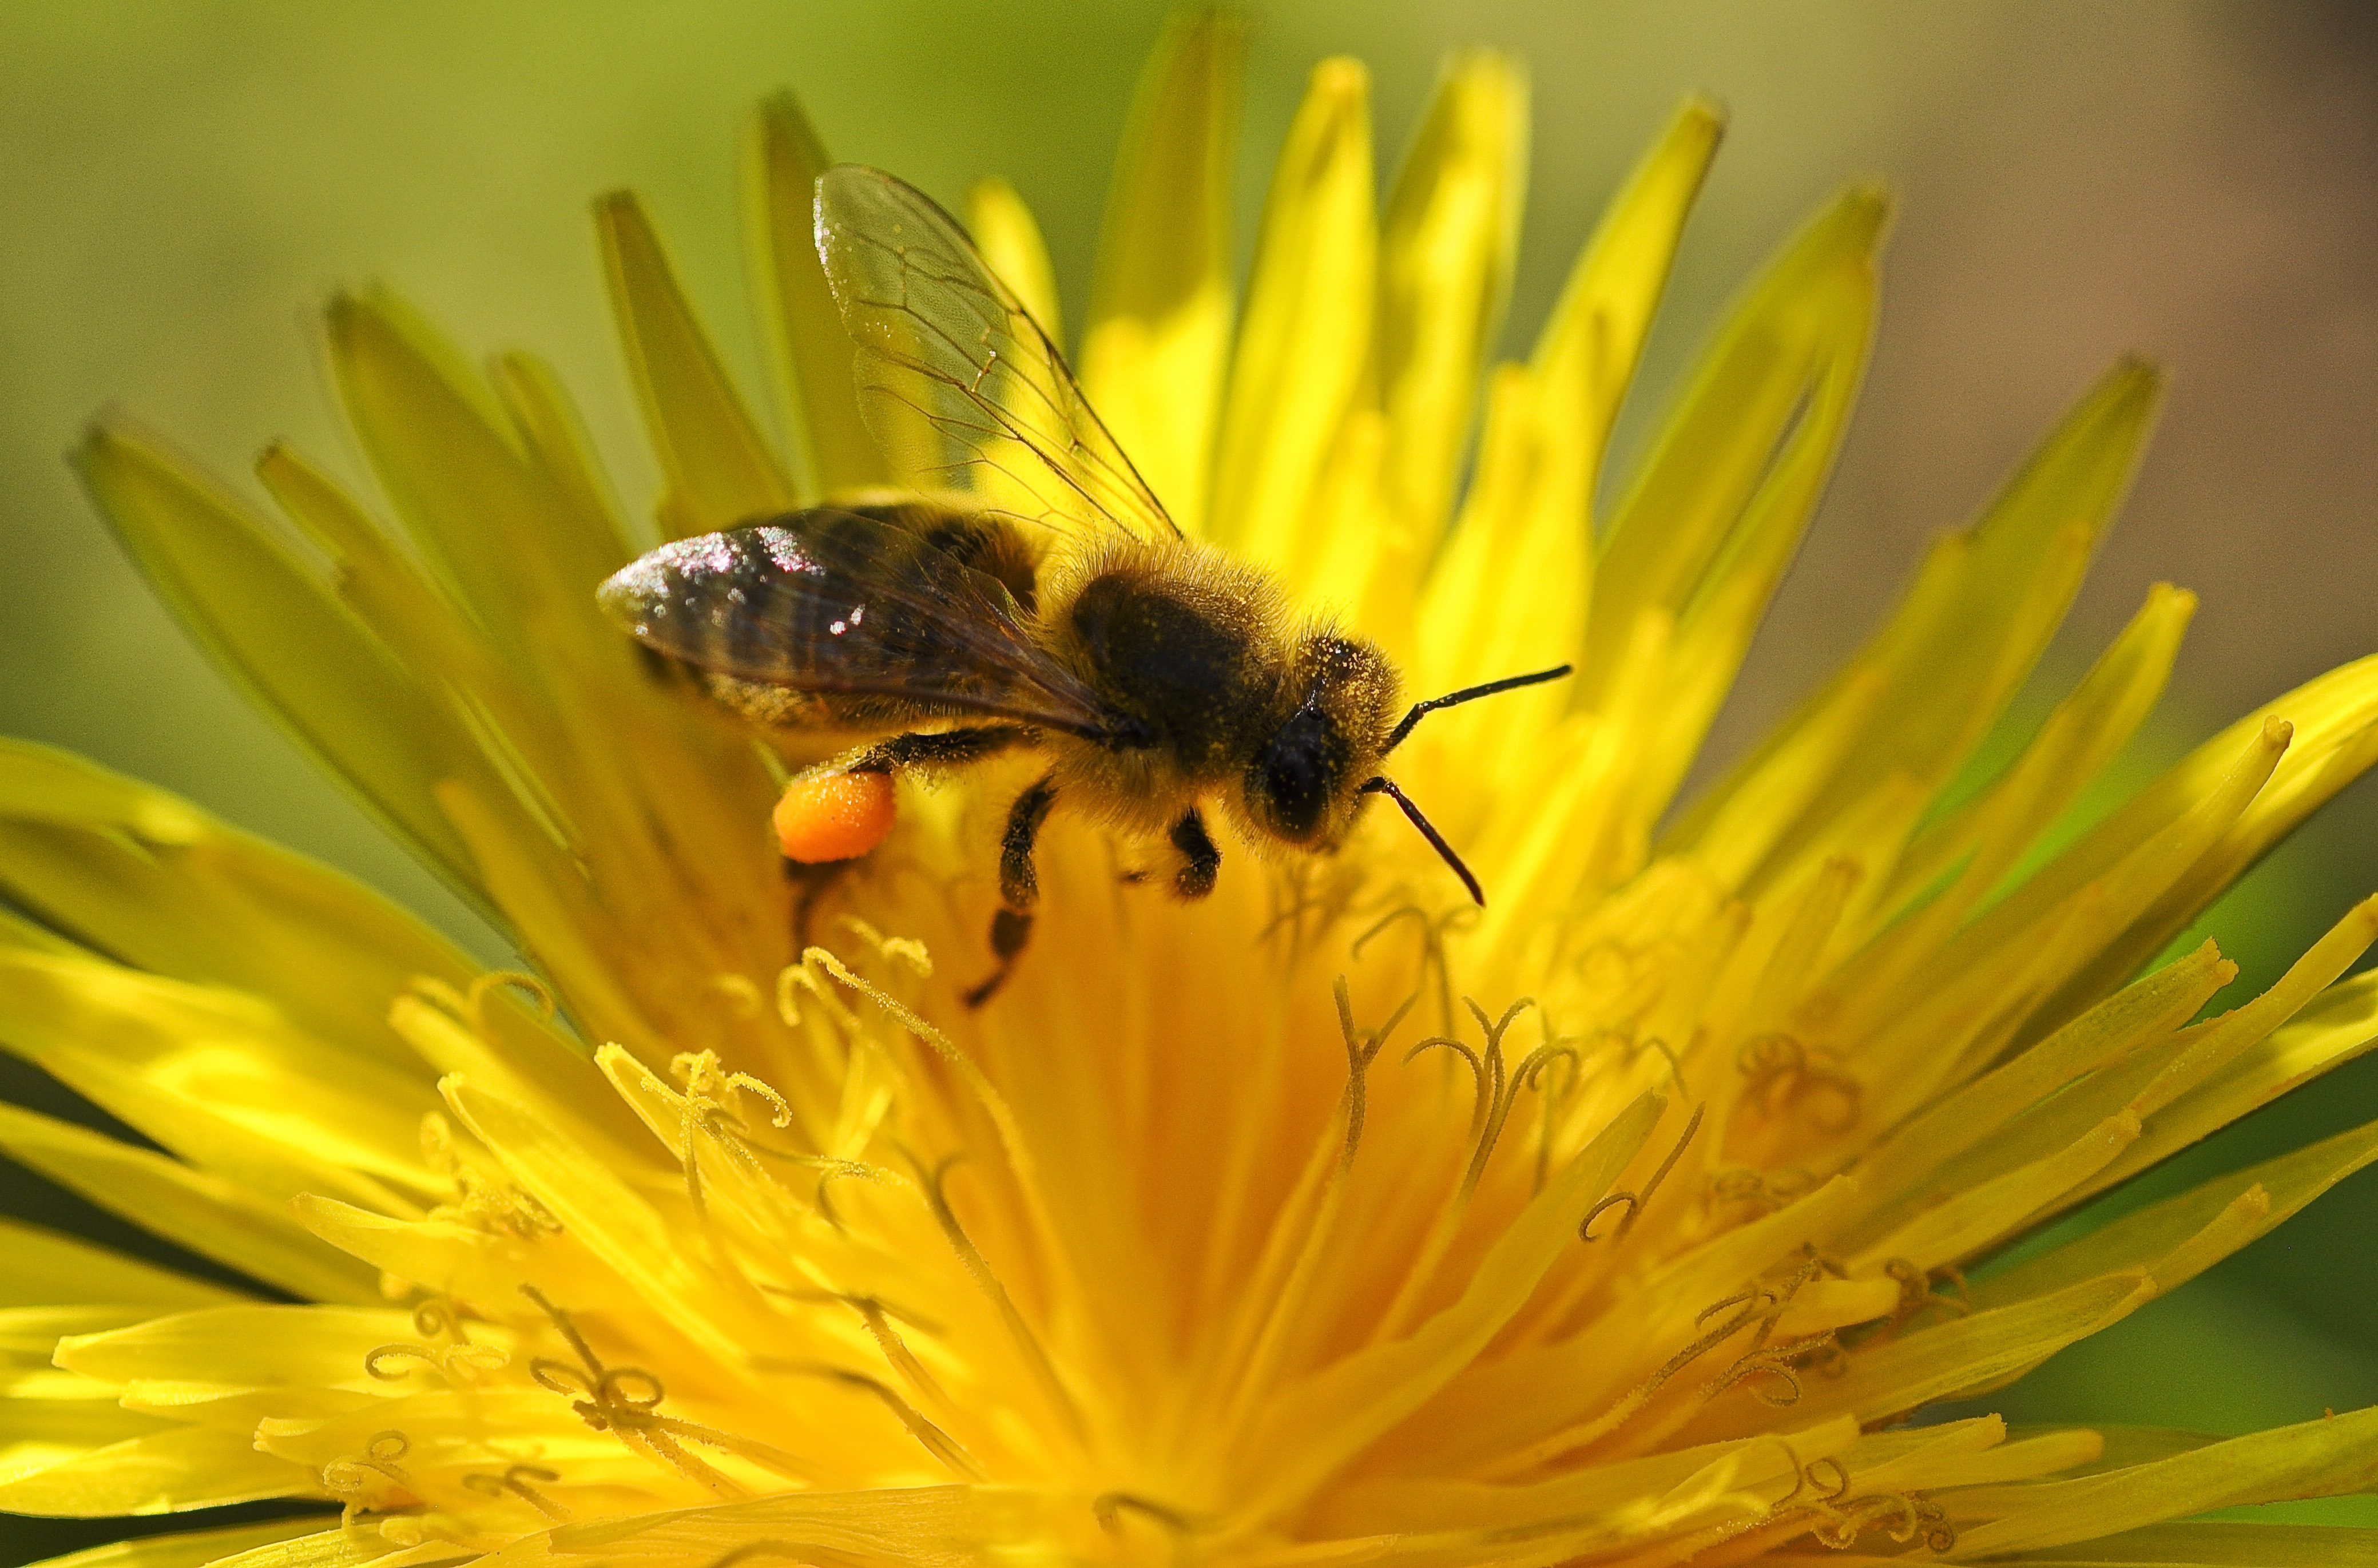 Handy-Wallpaper Tiere, Insekten, Makro, Insekt, Biene, Gelbe Blume kostenlos herunterladen.